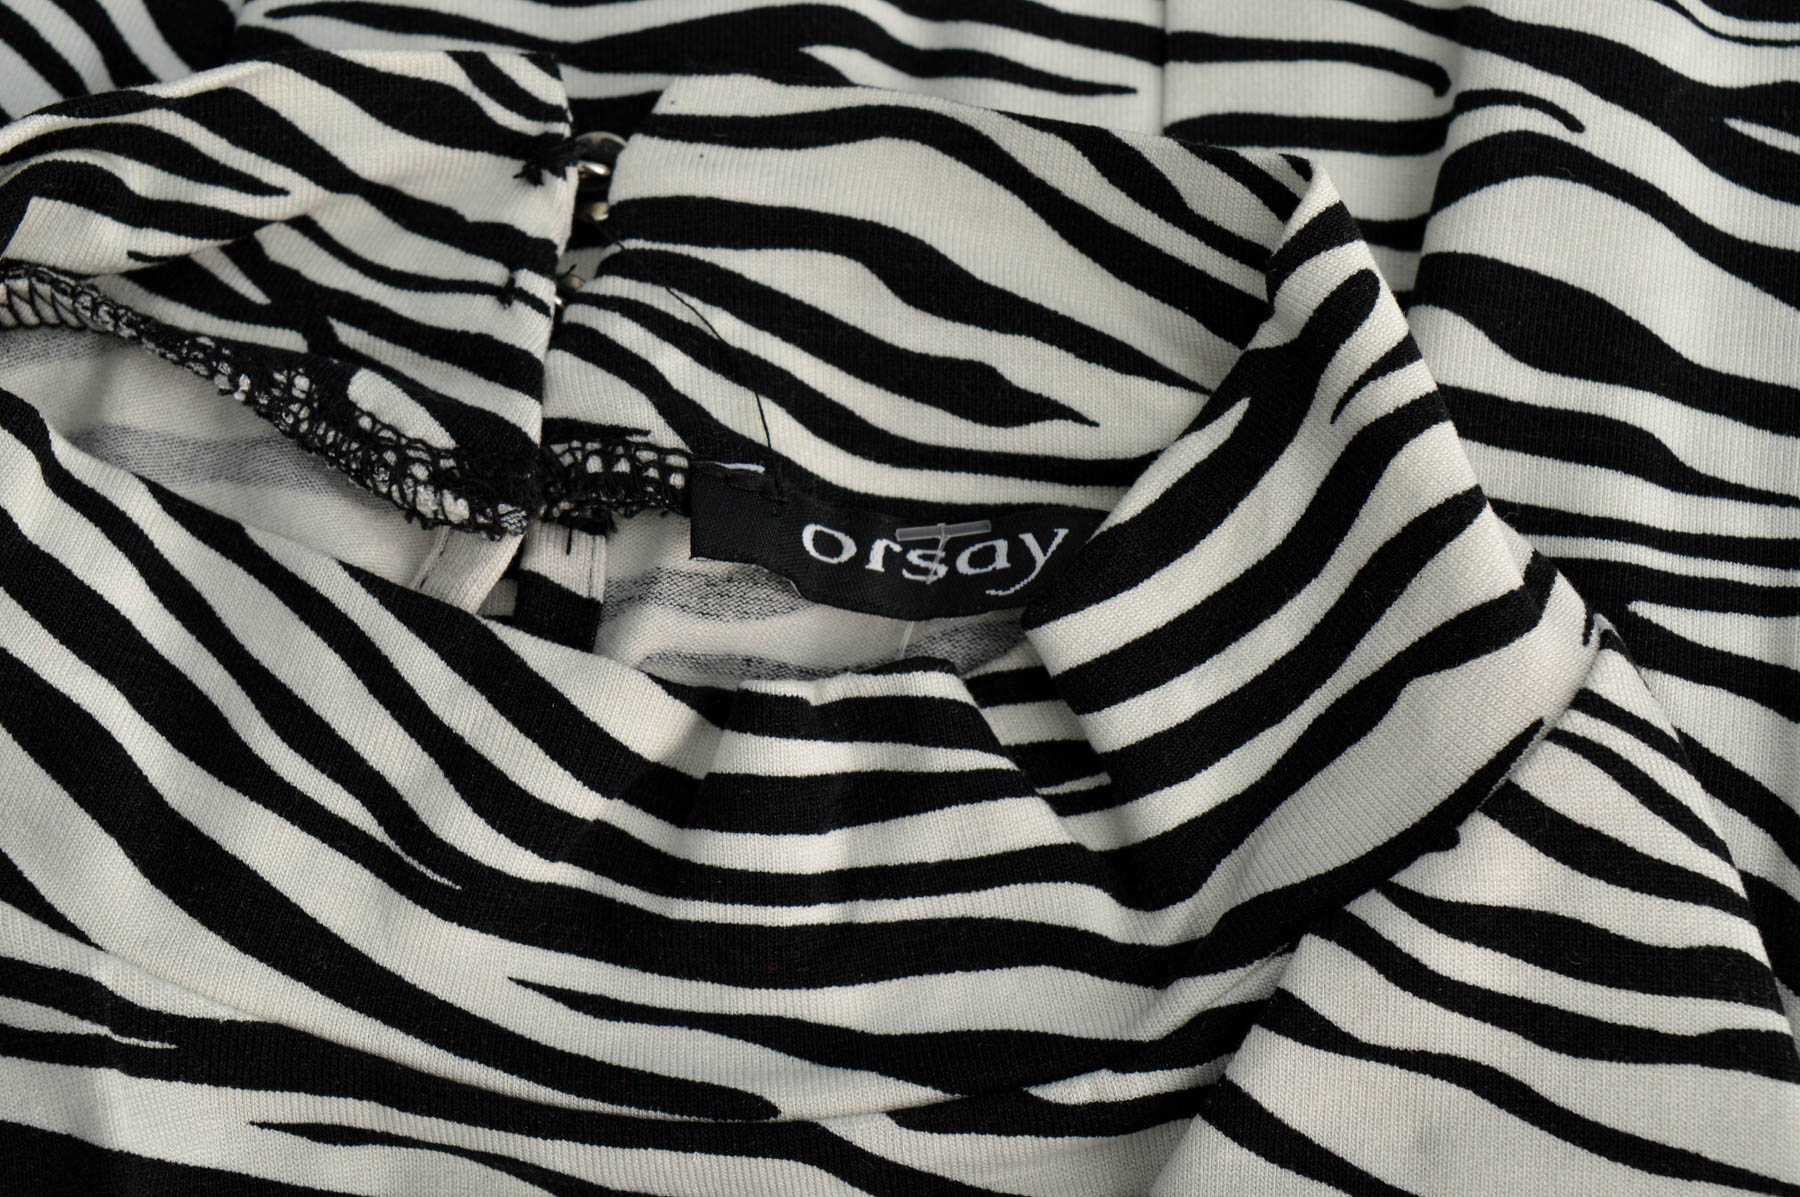 Дамска блуза - Orsay - 2